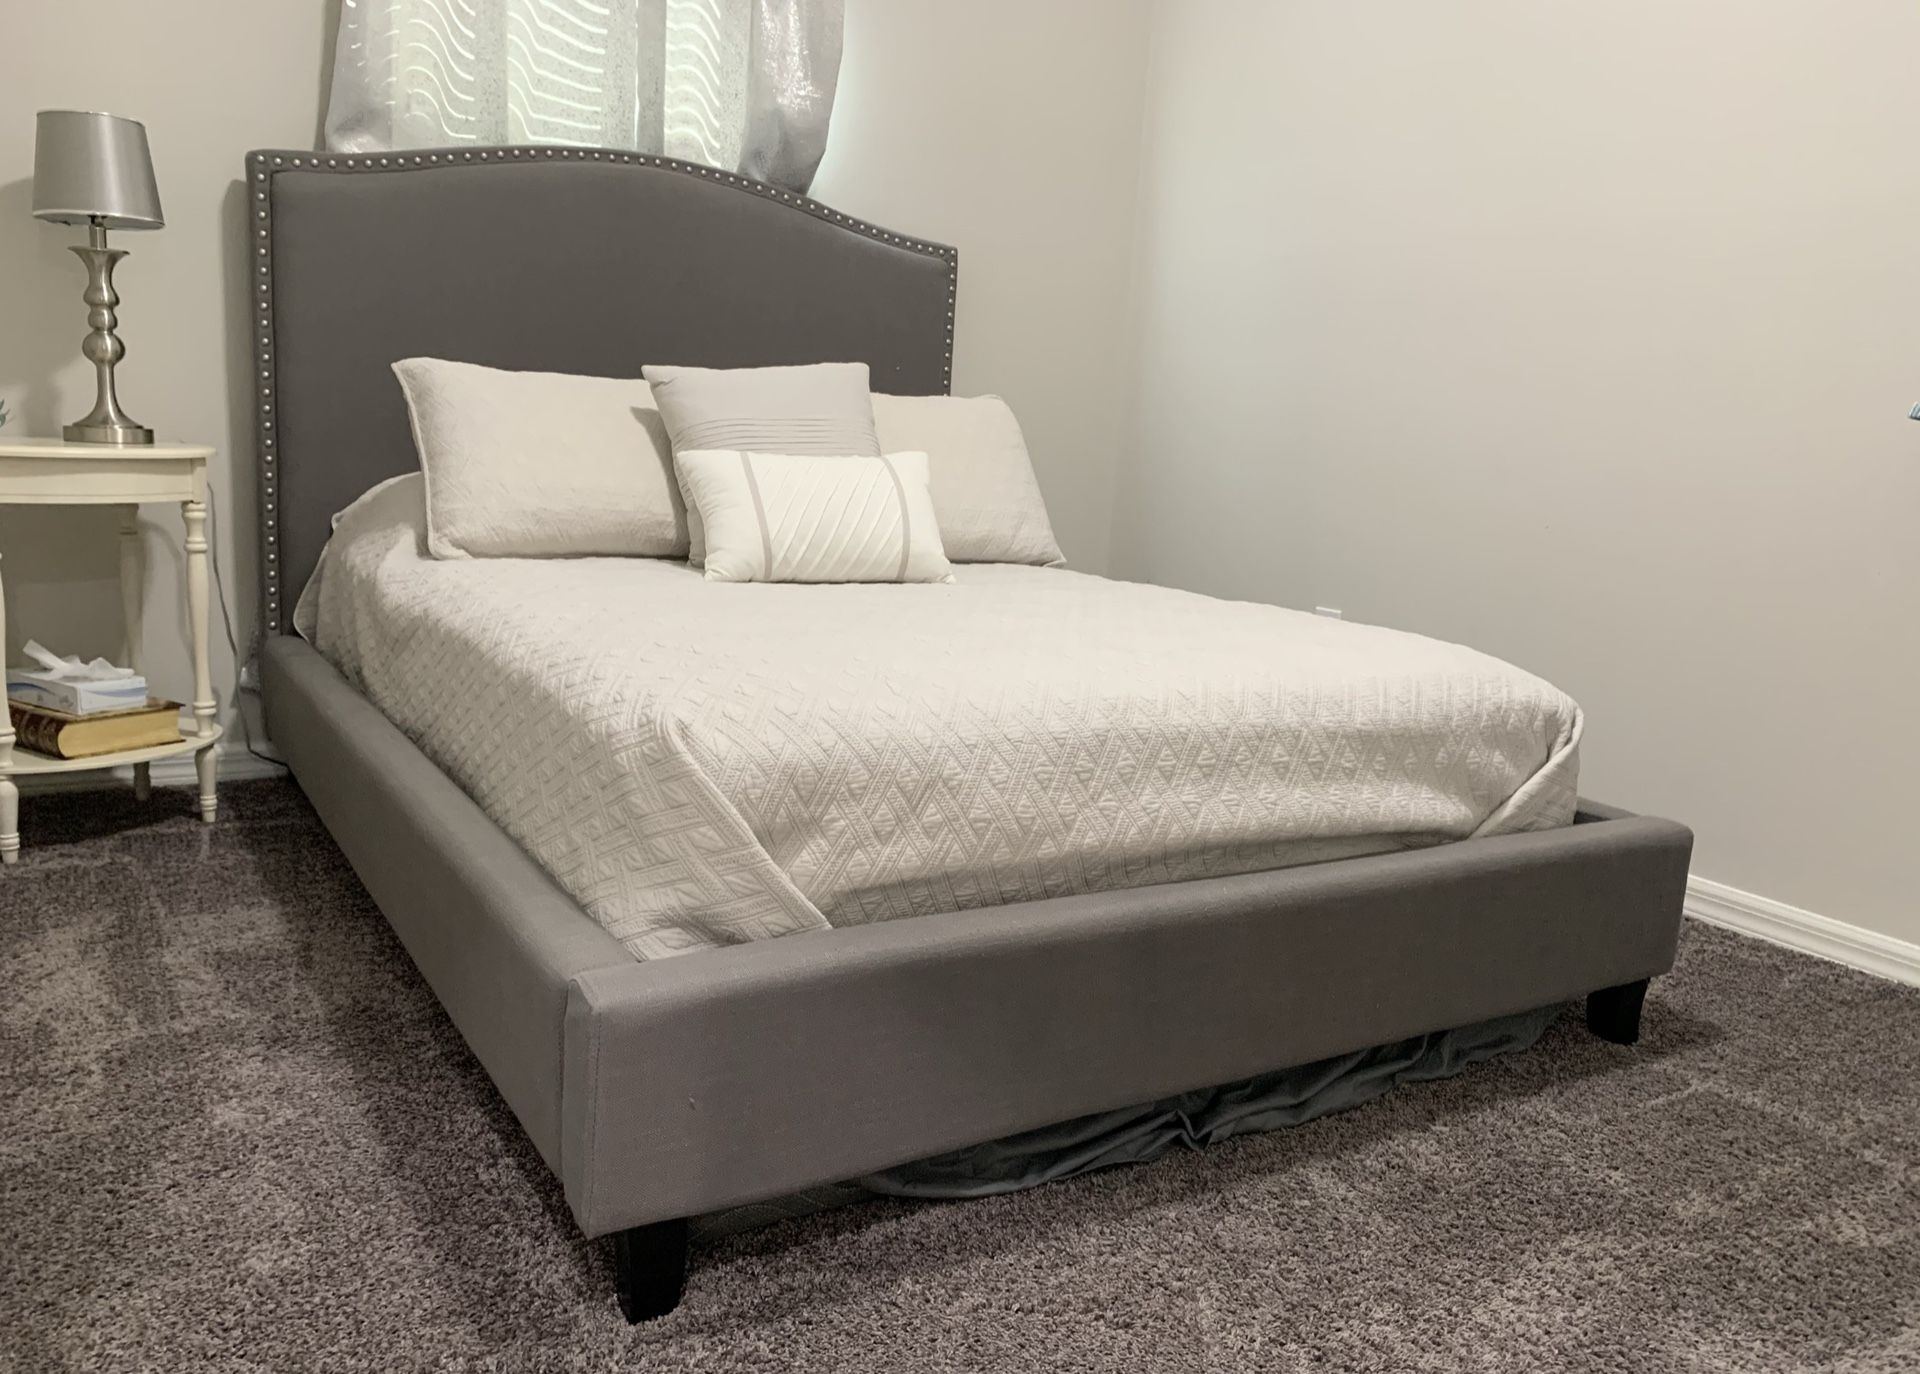 Bed frame, mattress, & box spring